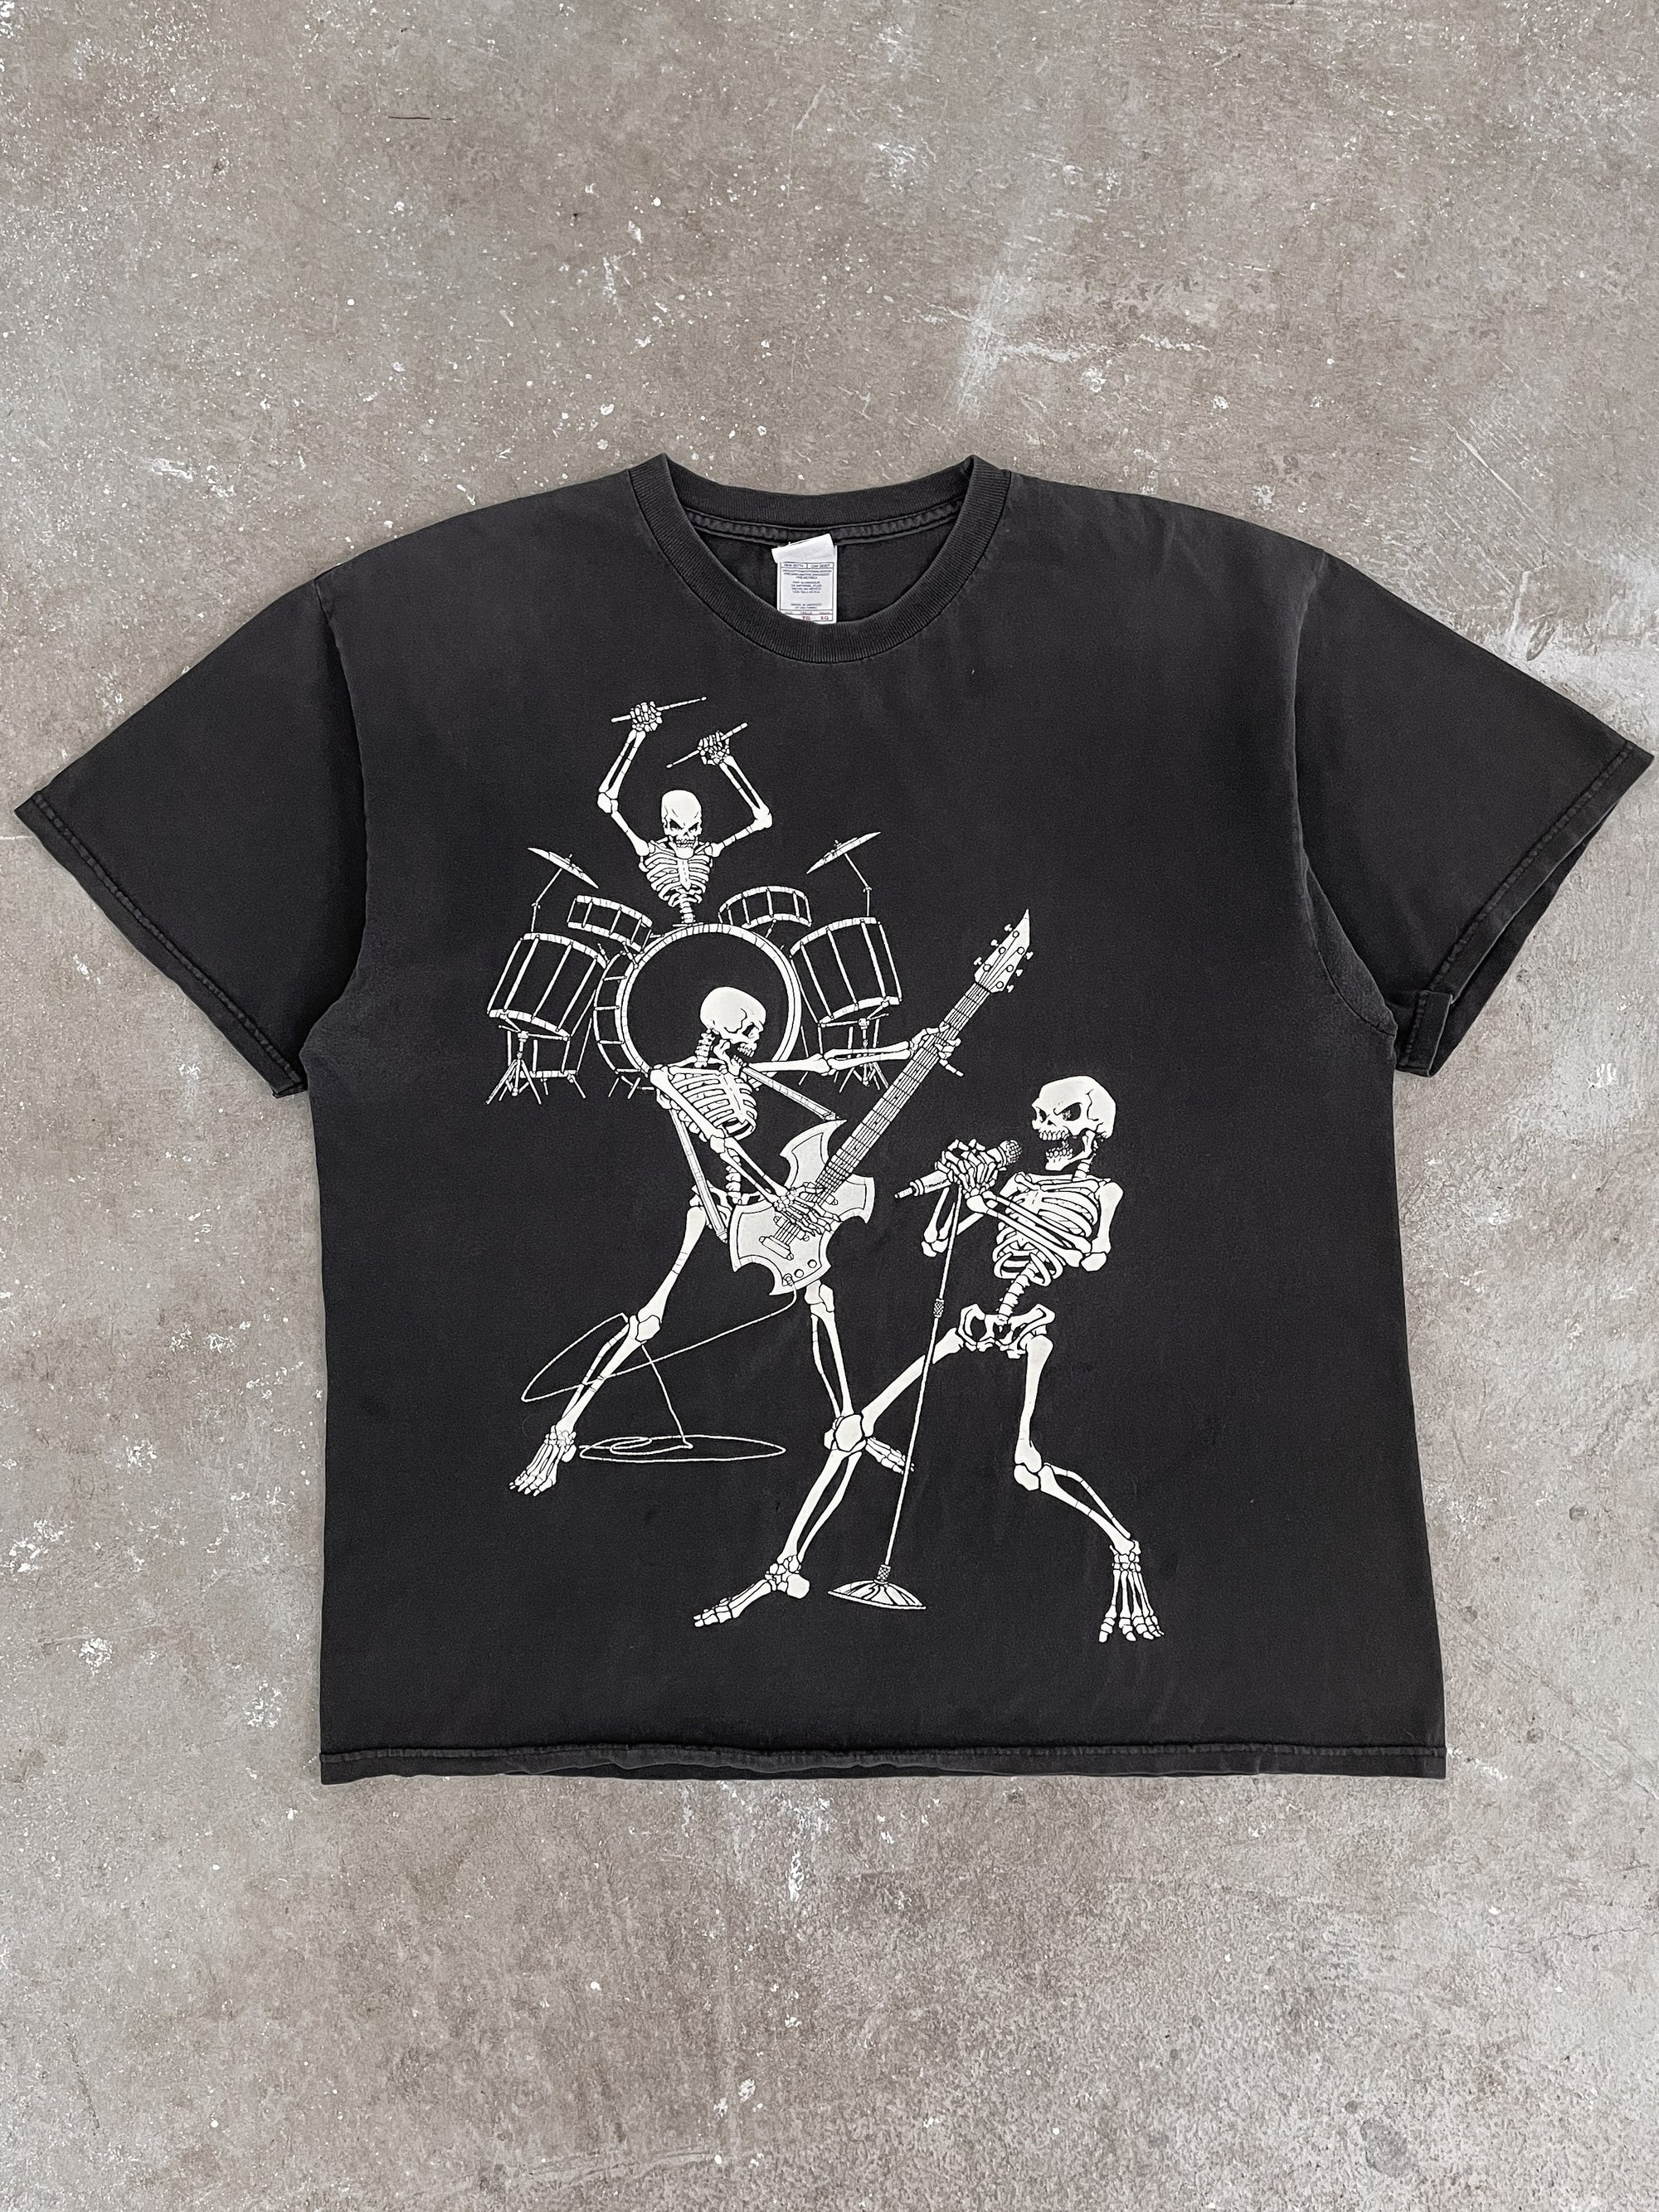 2000s “Skeleton Metal Band” Faded Tee (XL)